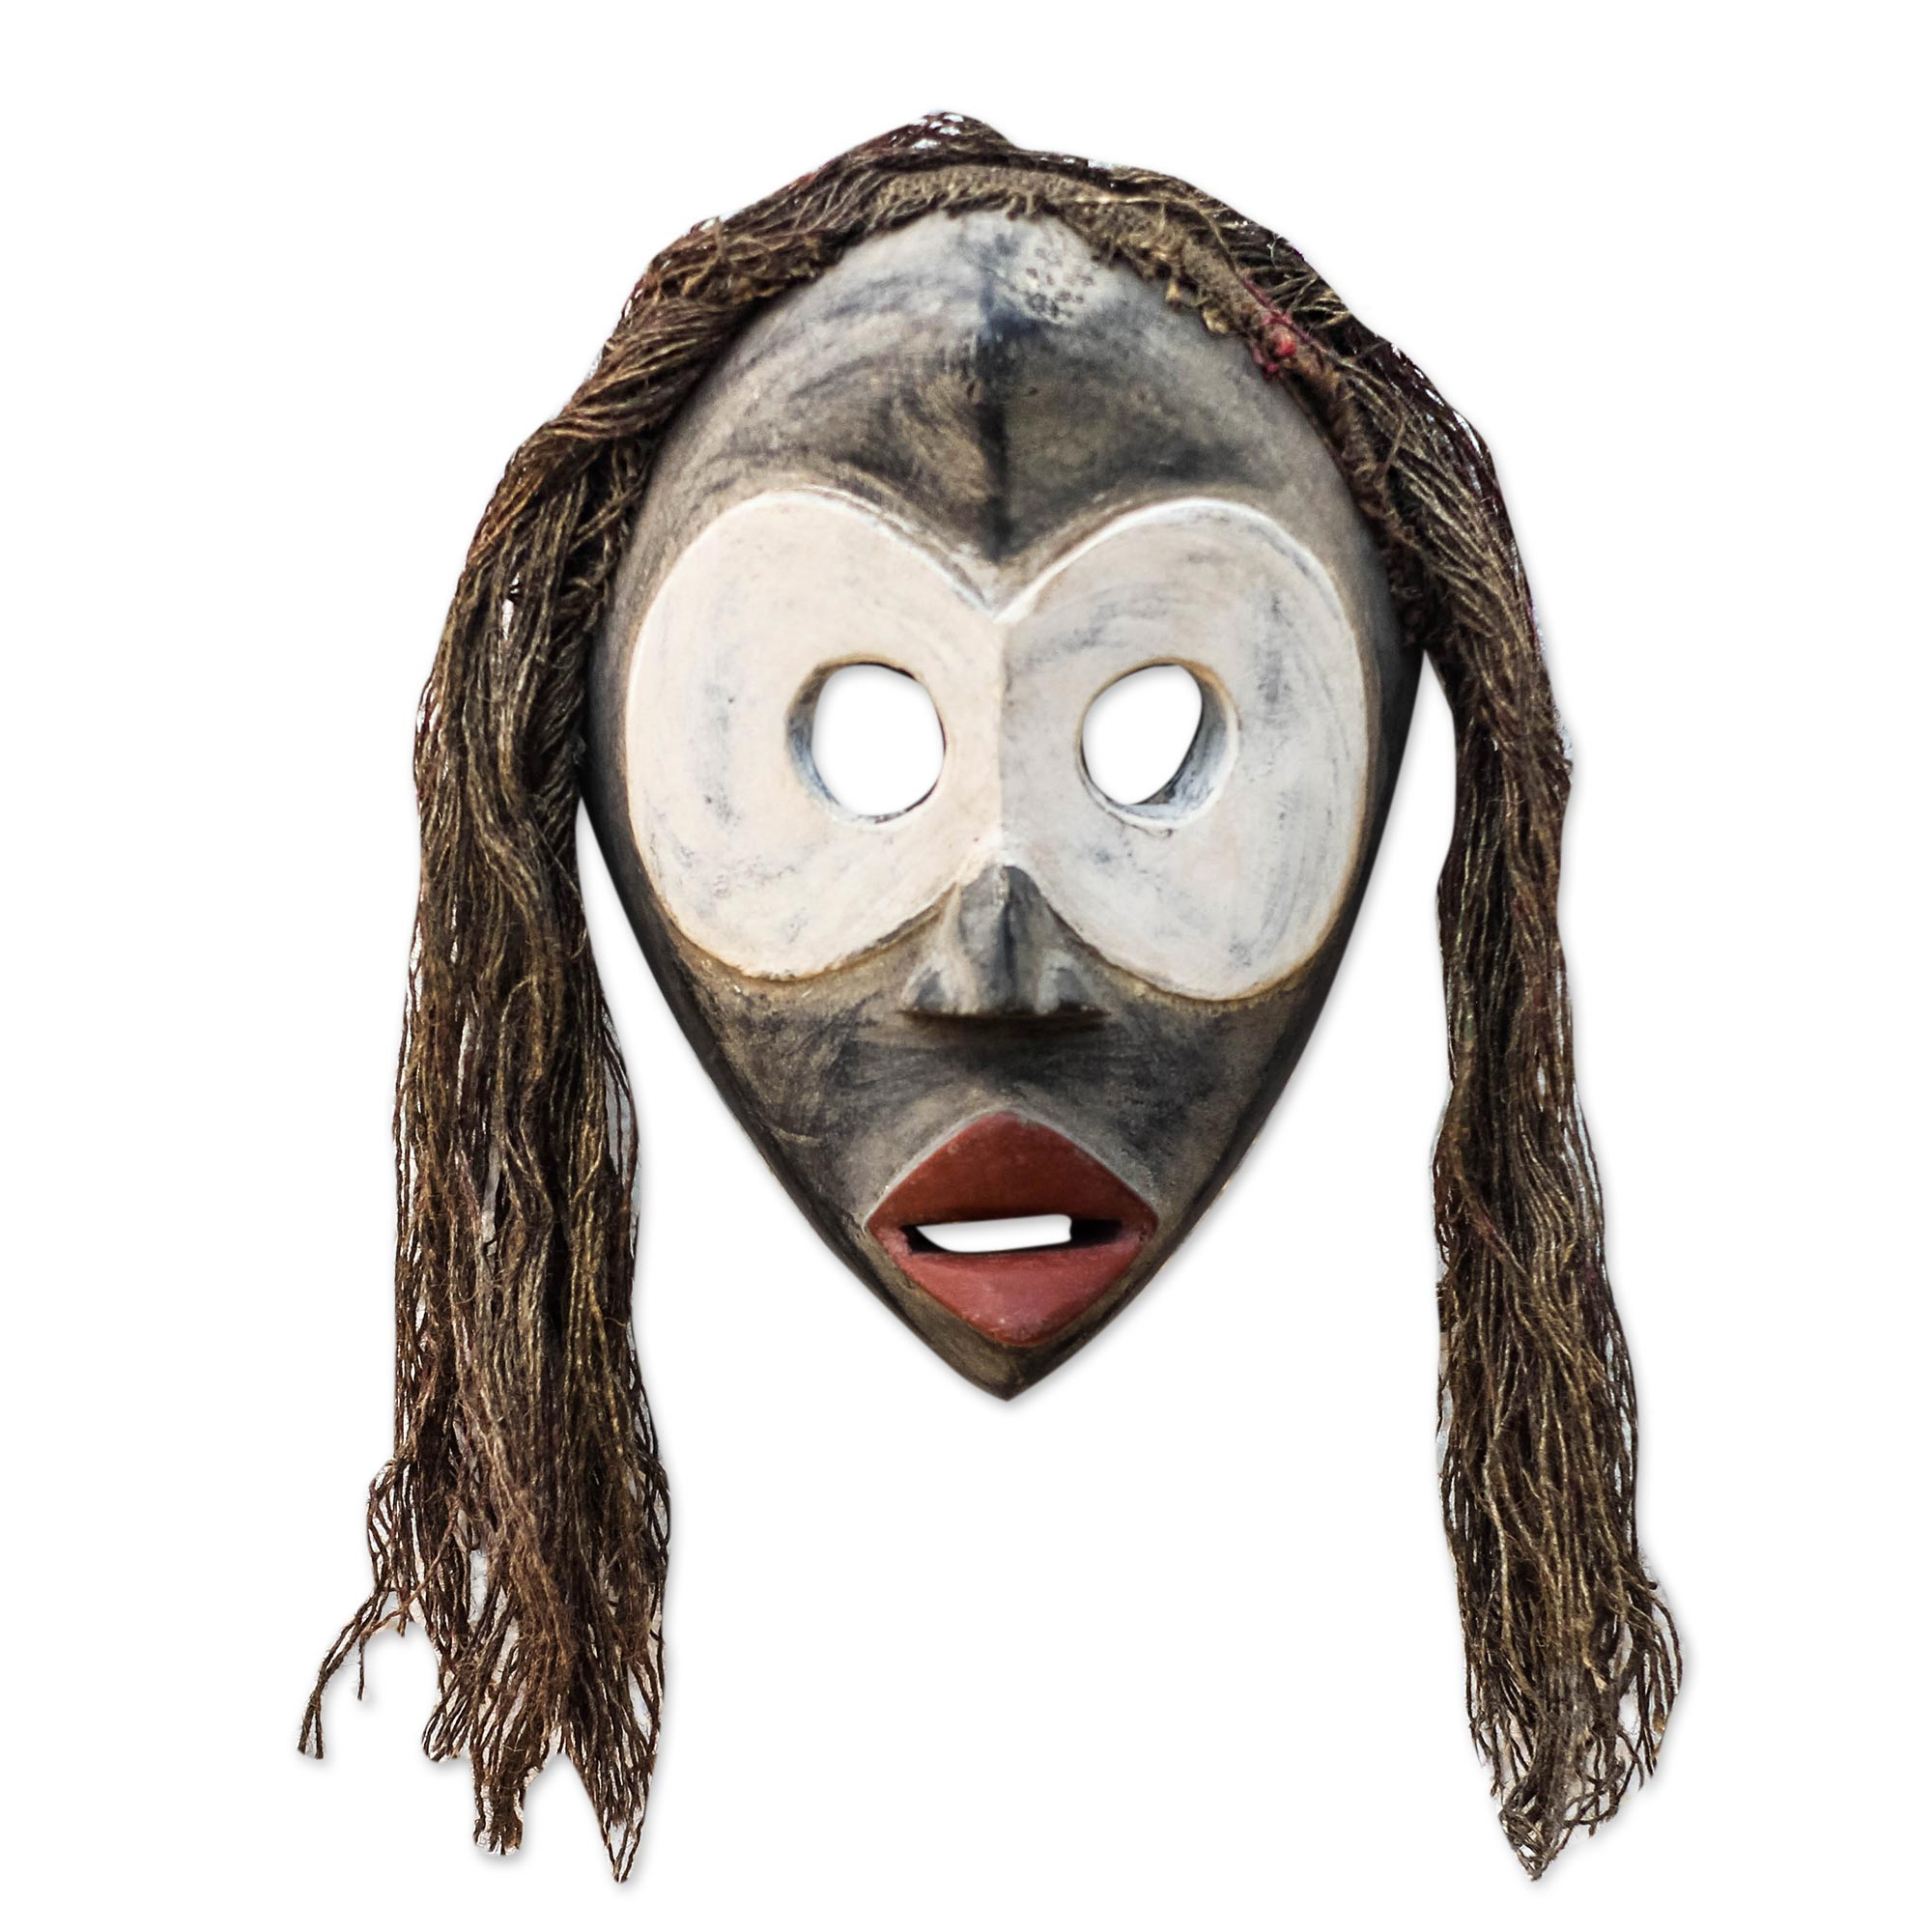 Collection маски. Страшные маски Африки. Маска человек бамбук. African Mask.